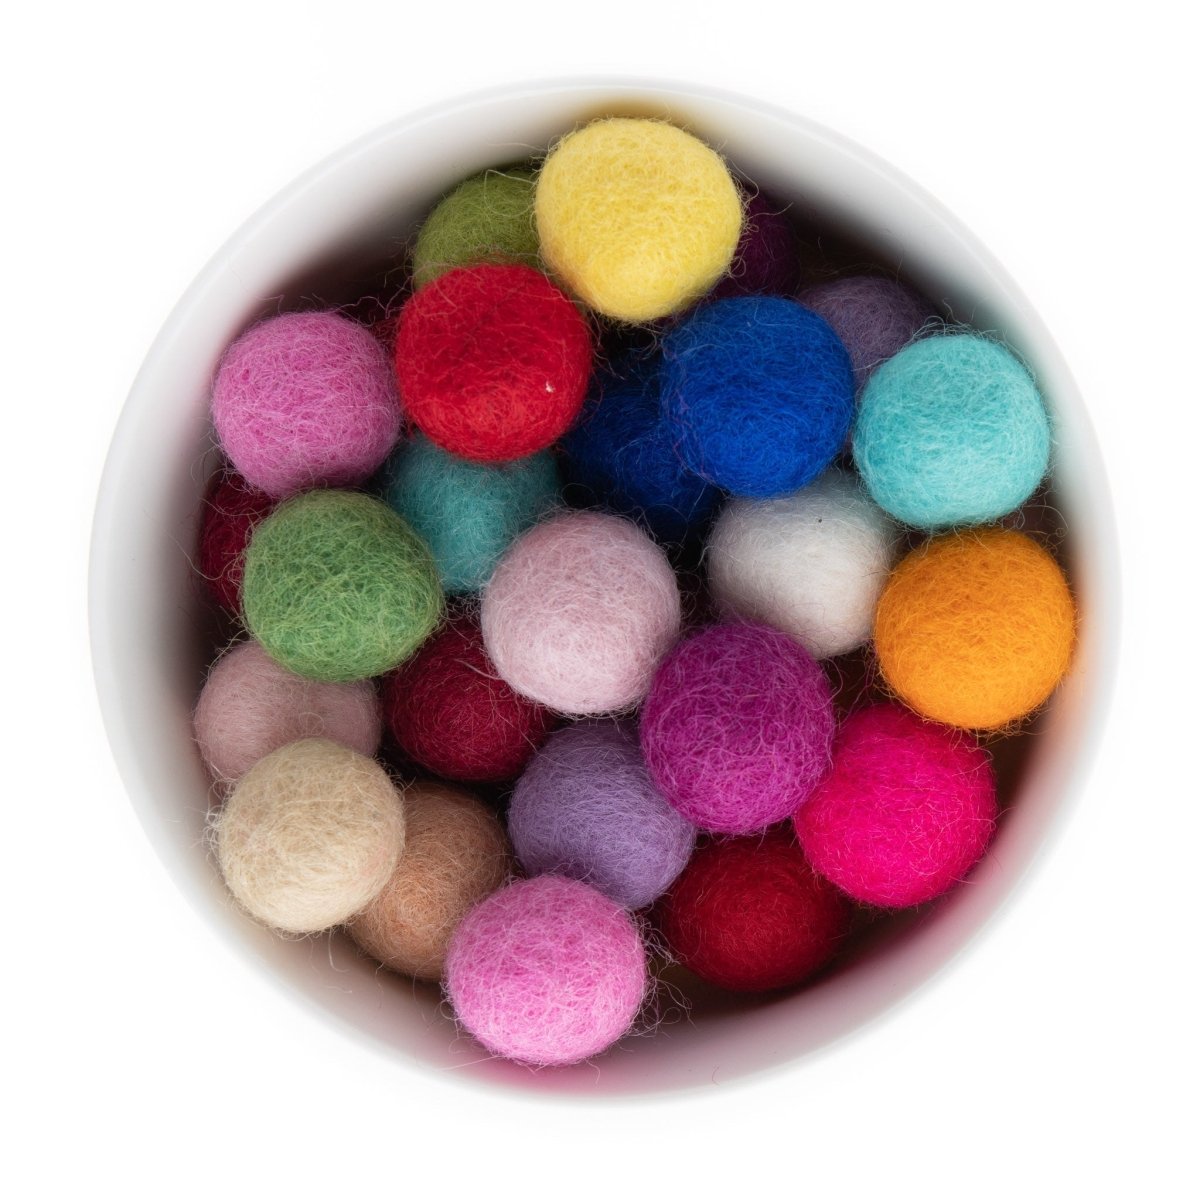 Felt & Crochet Beads Felt Balls 22mm Army Green from Cara & Co Craft Supply